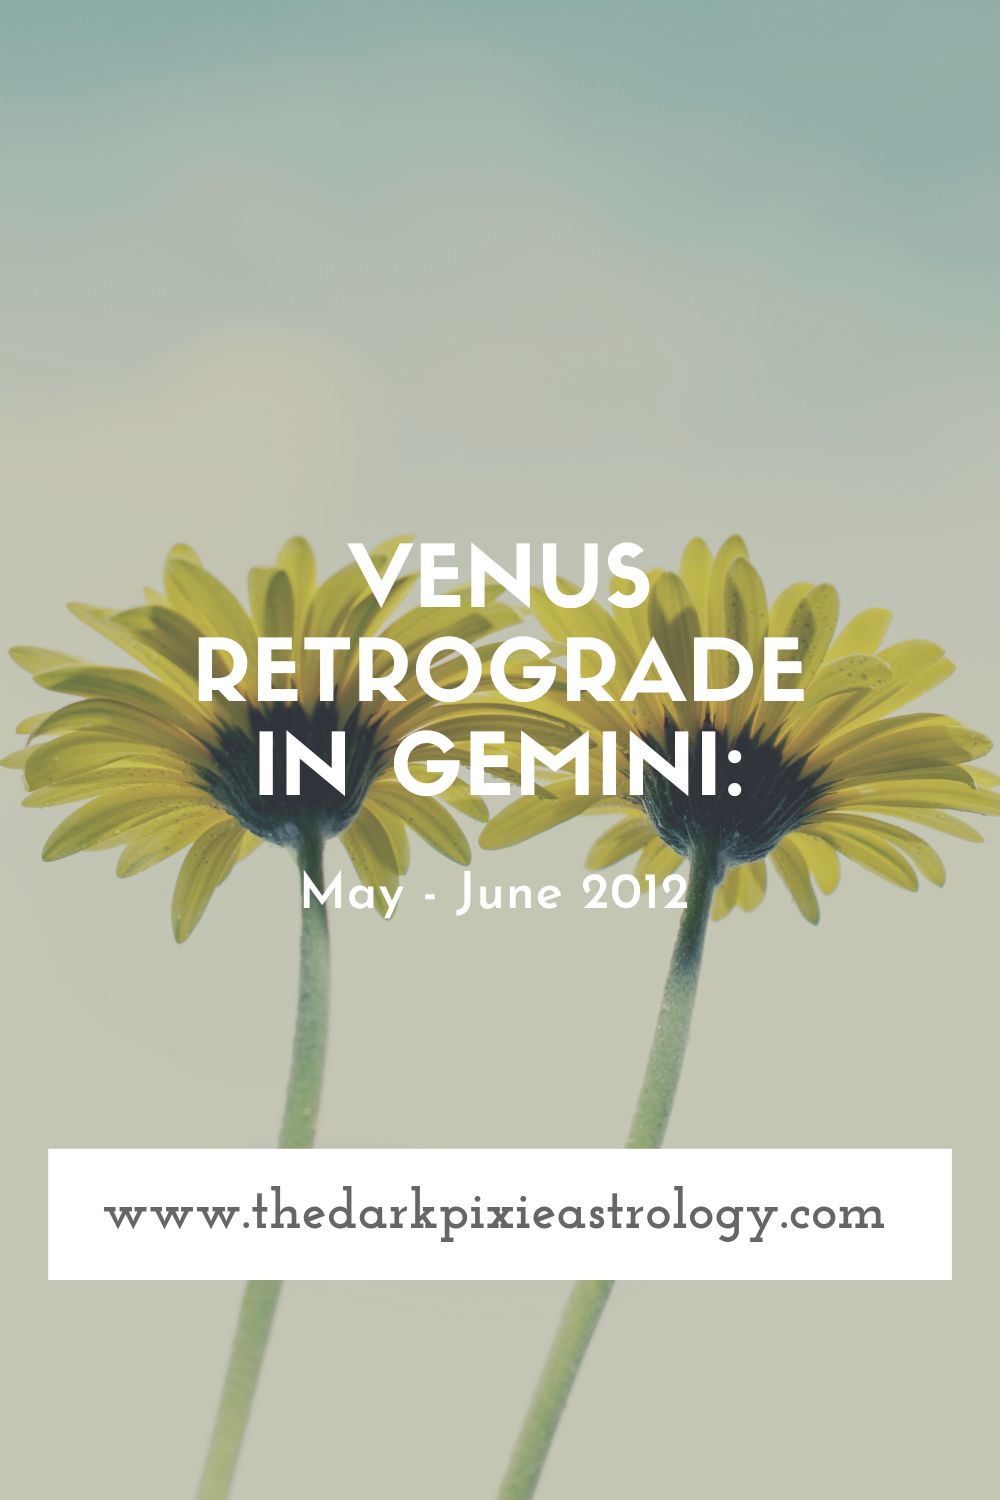 Venus Retrograde in Gemini: May - June 2012 - The Dark Pixie Astrology